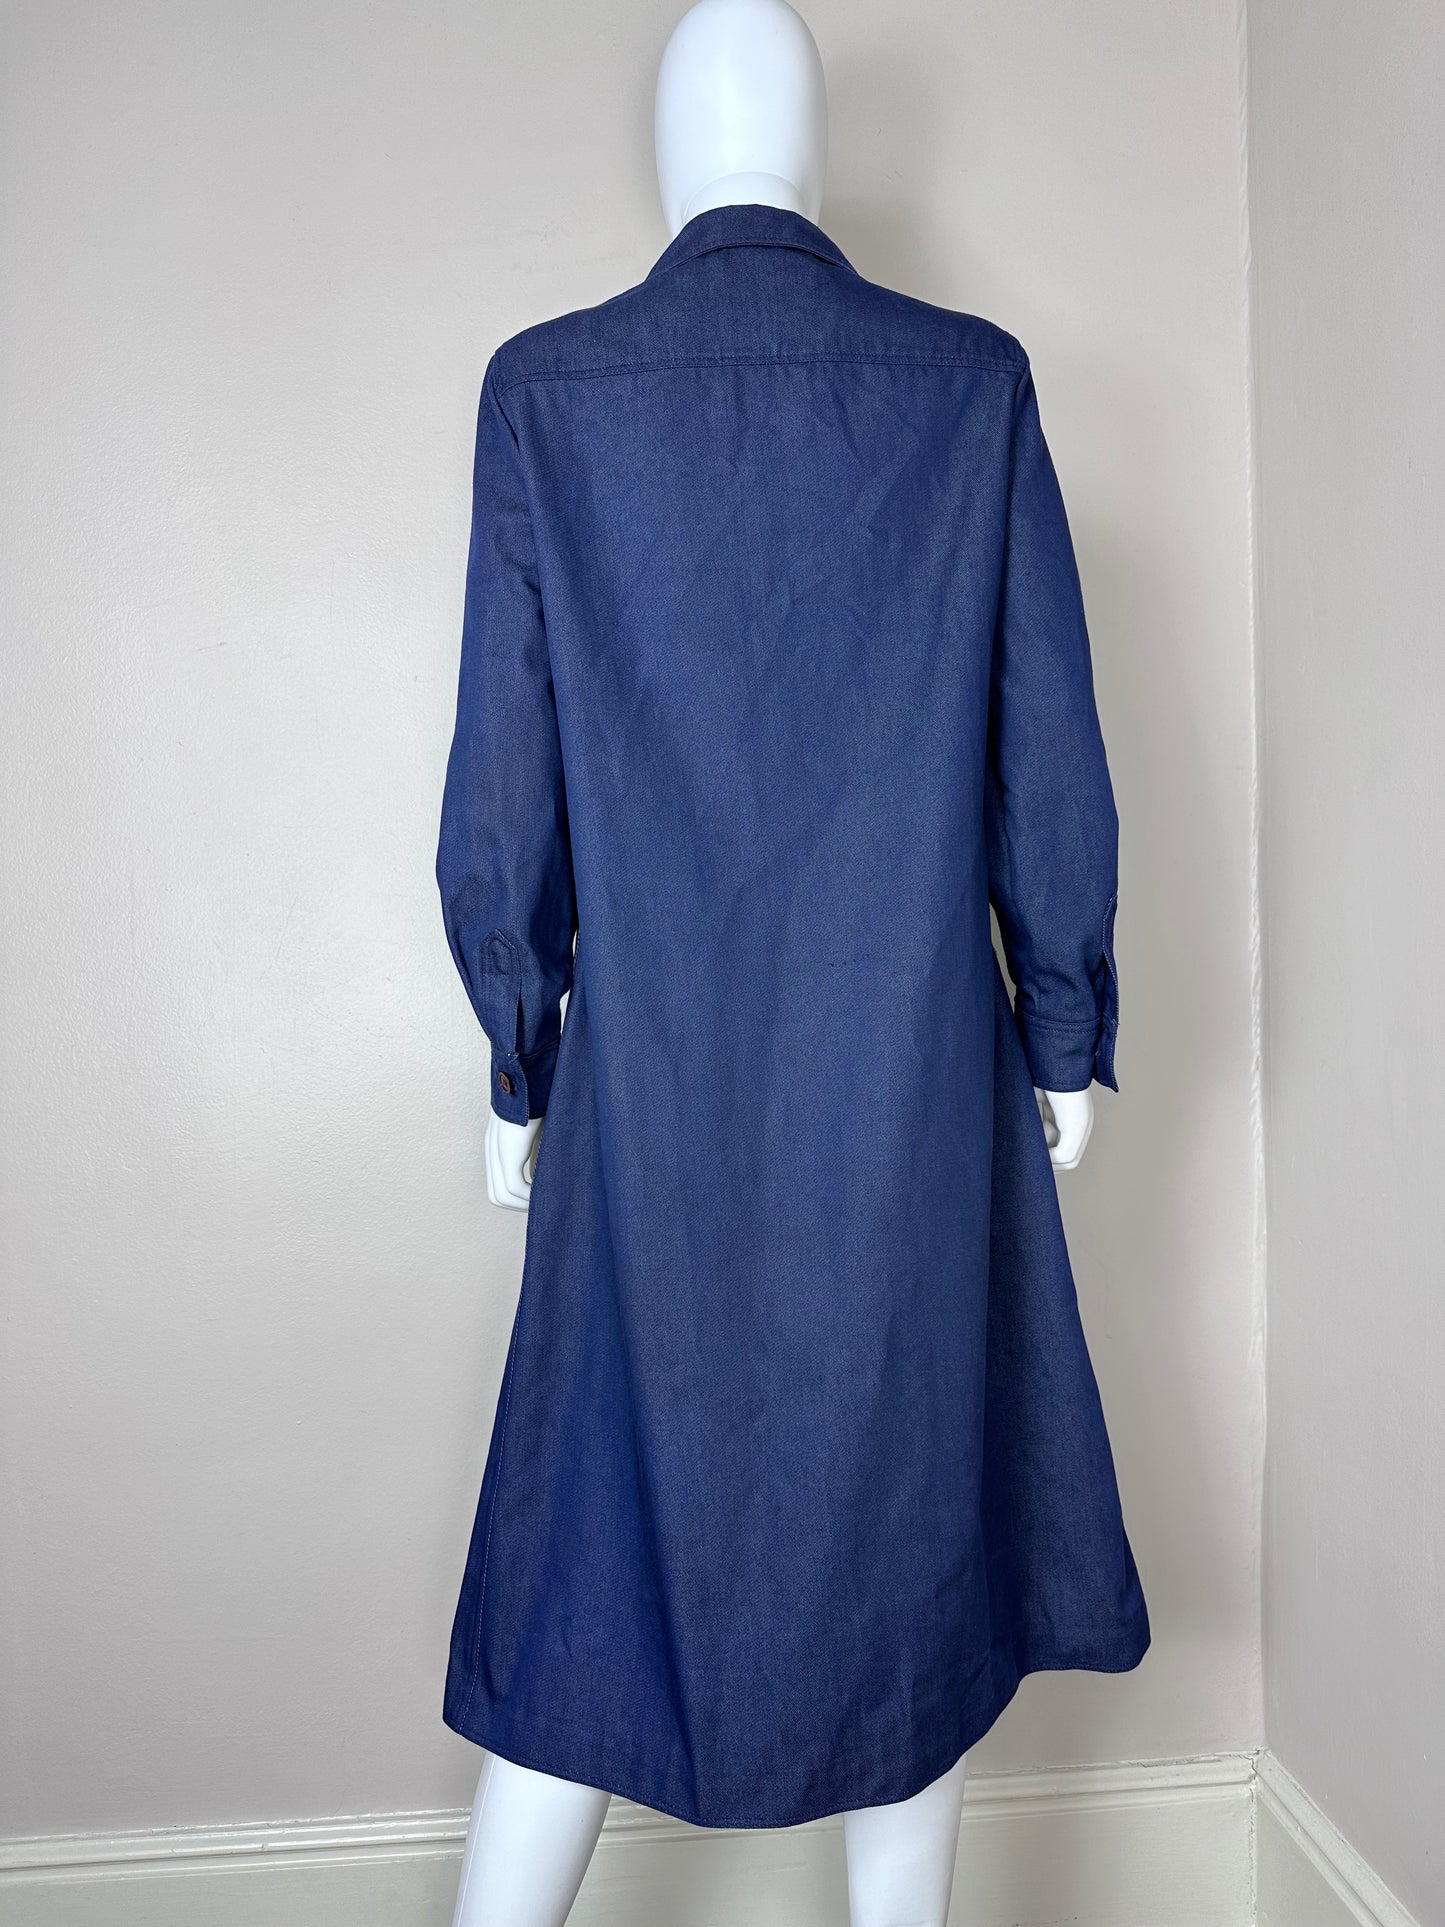 1970s Halston Denim Dress Coat, Rain Jacket, Halston Three Size S-M, Neiman Marcus